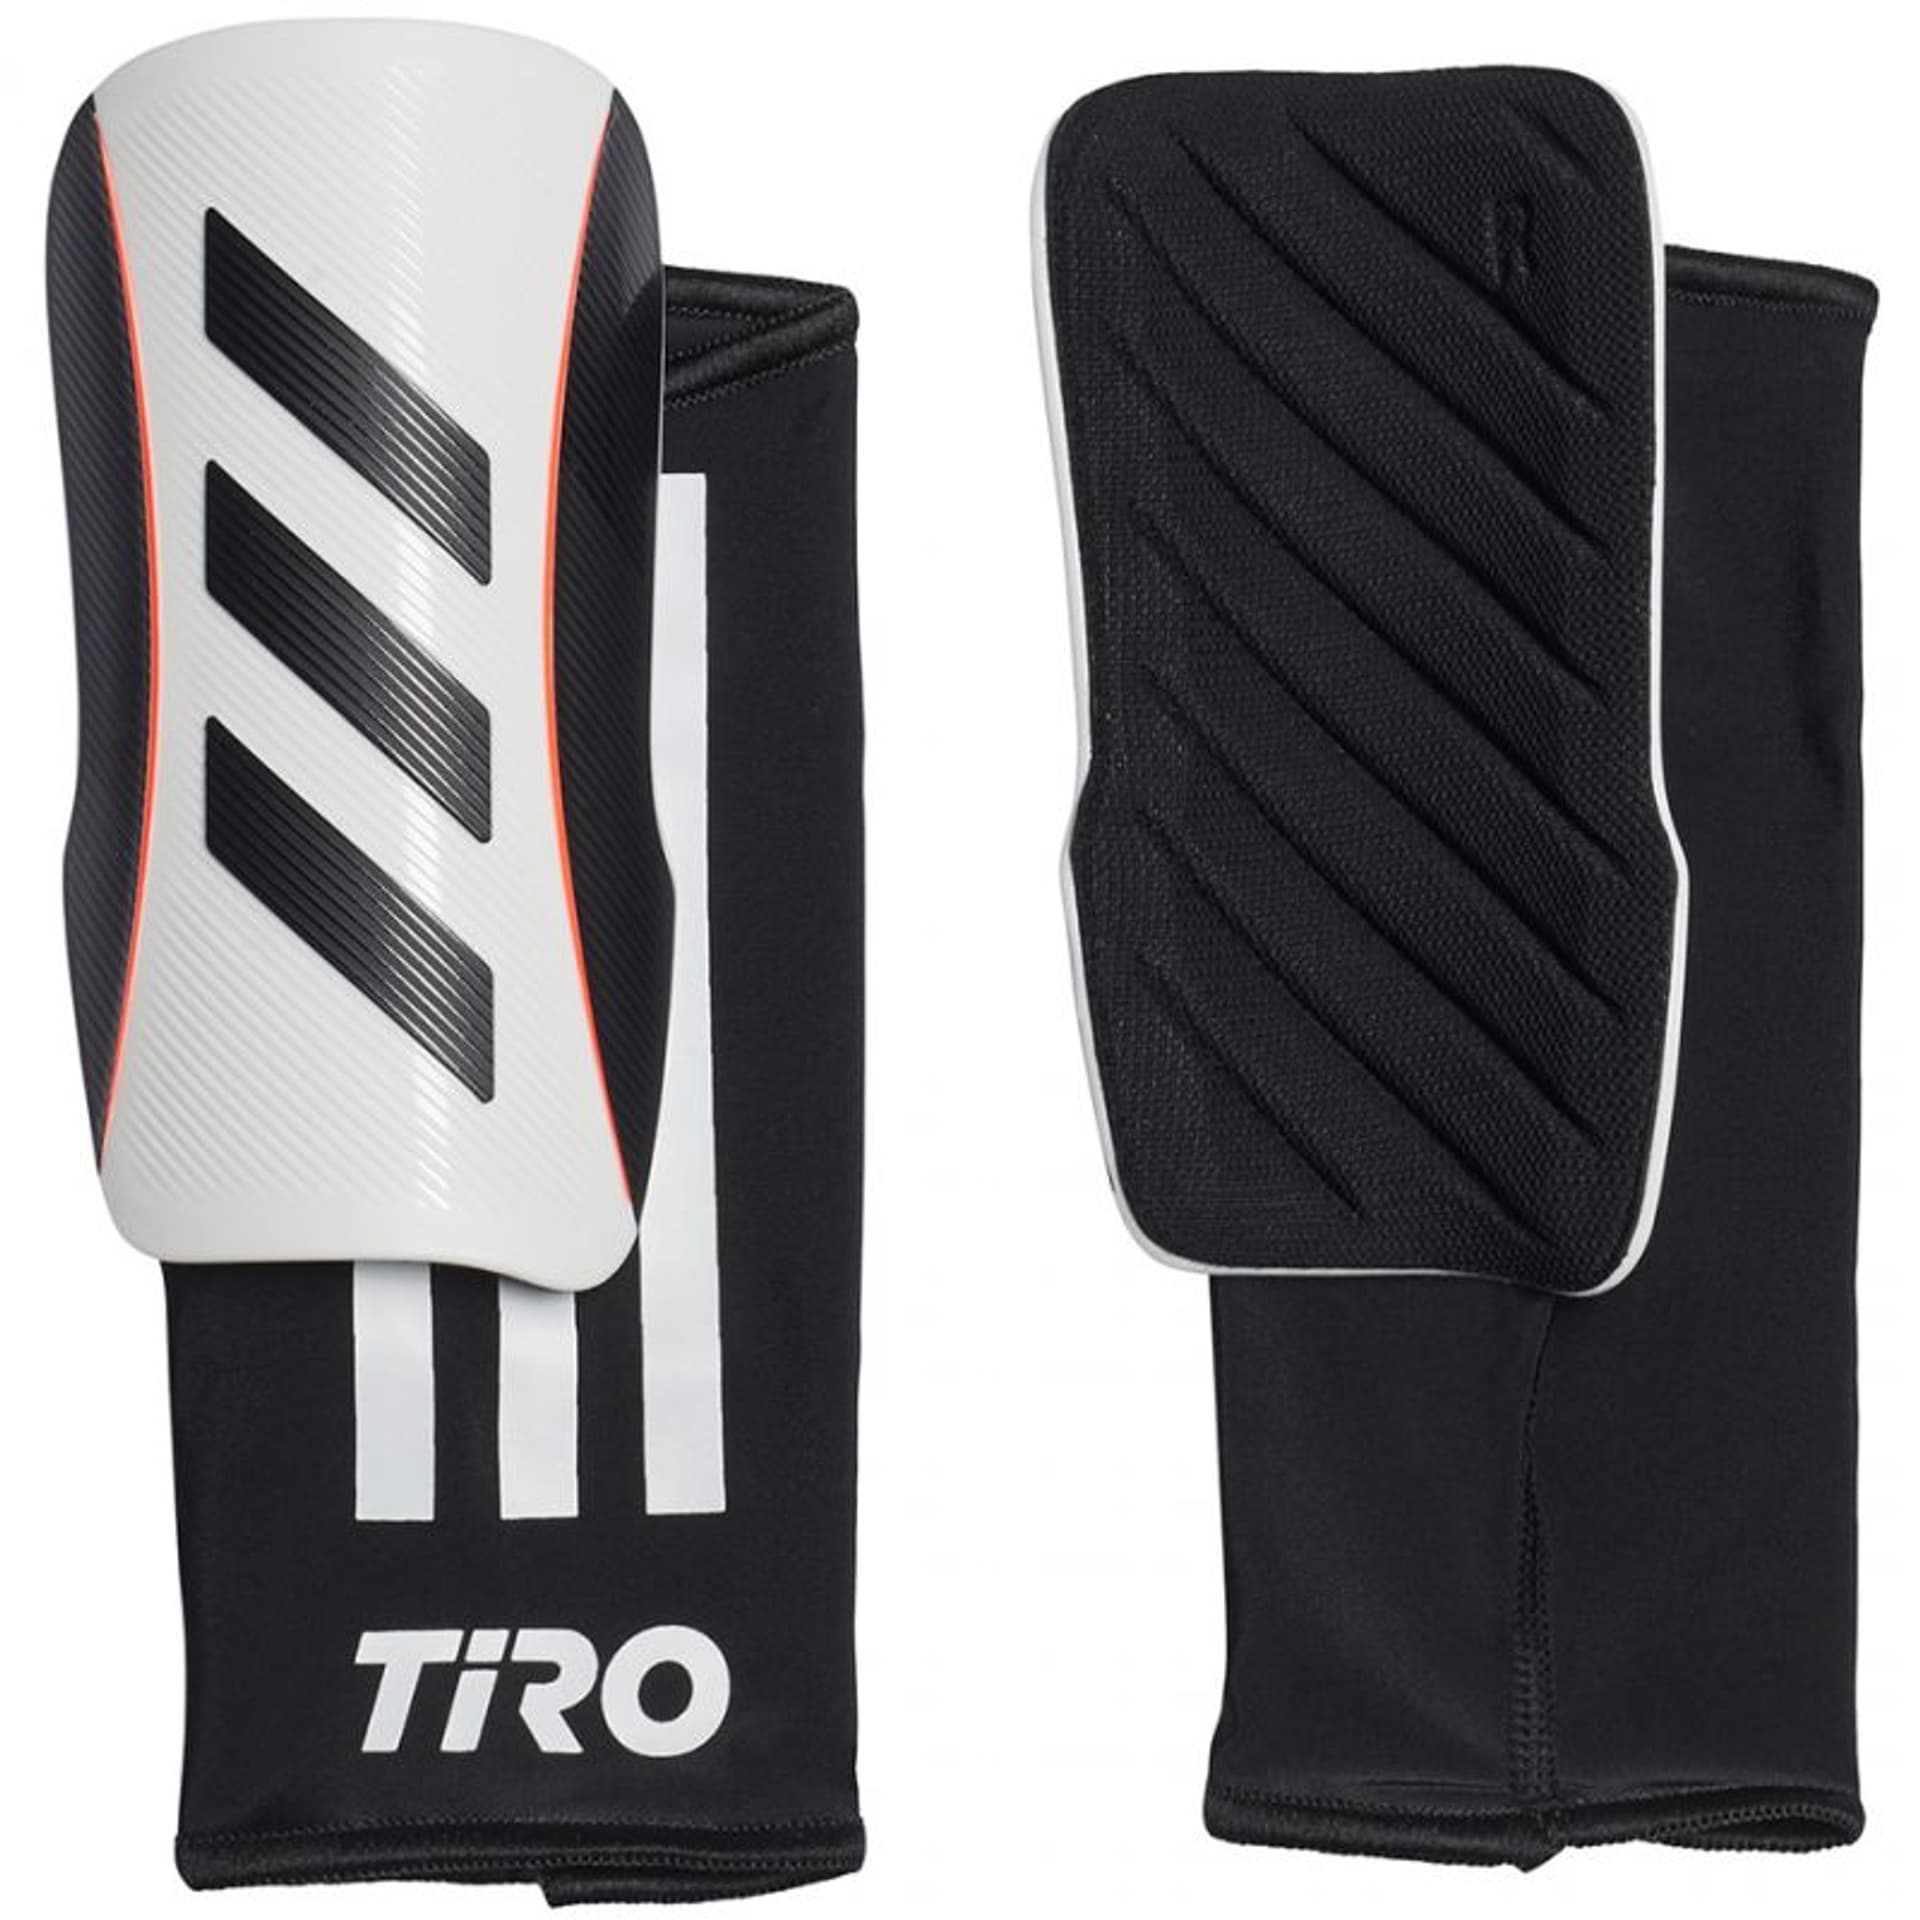 Adidas, Nagolenniki, Tiro SG LGE GK3534, biało-czarny, rozmiar L